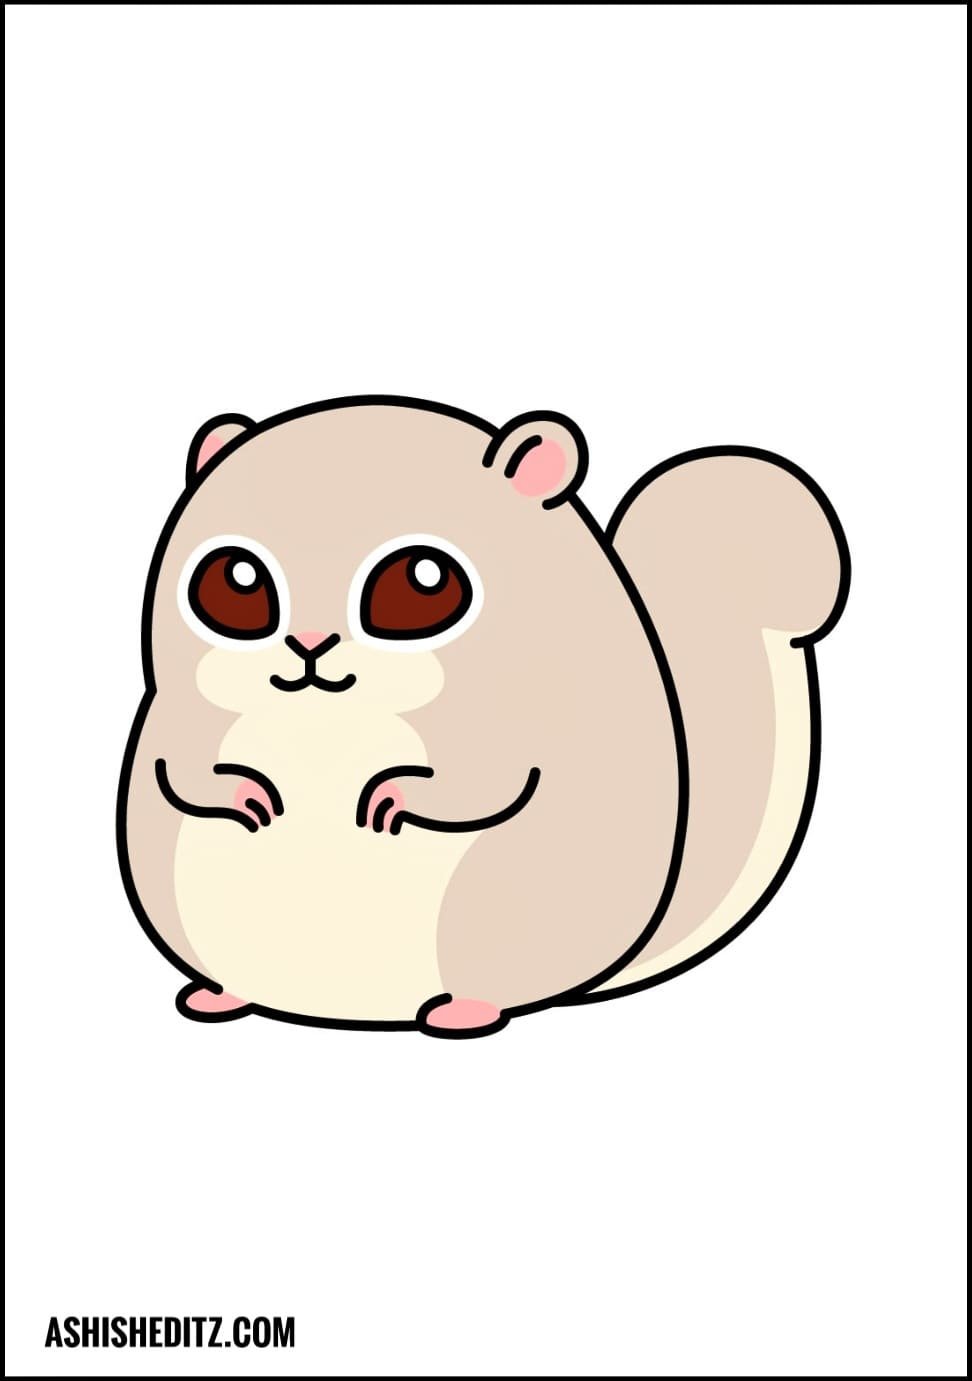 Cute Kawaii Chibi Squirrel Cartoon Illustration Painting · Creative Fabrica